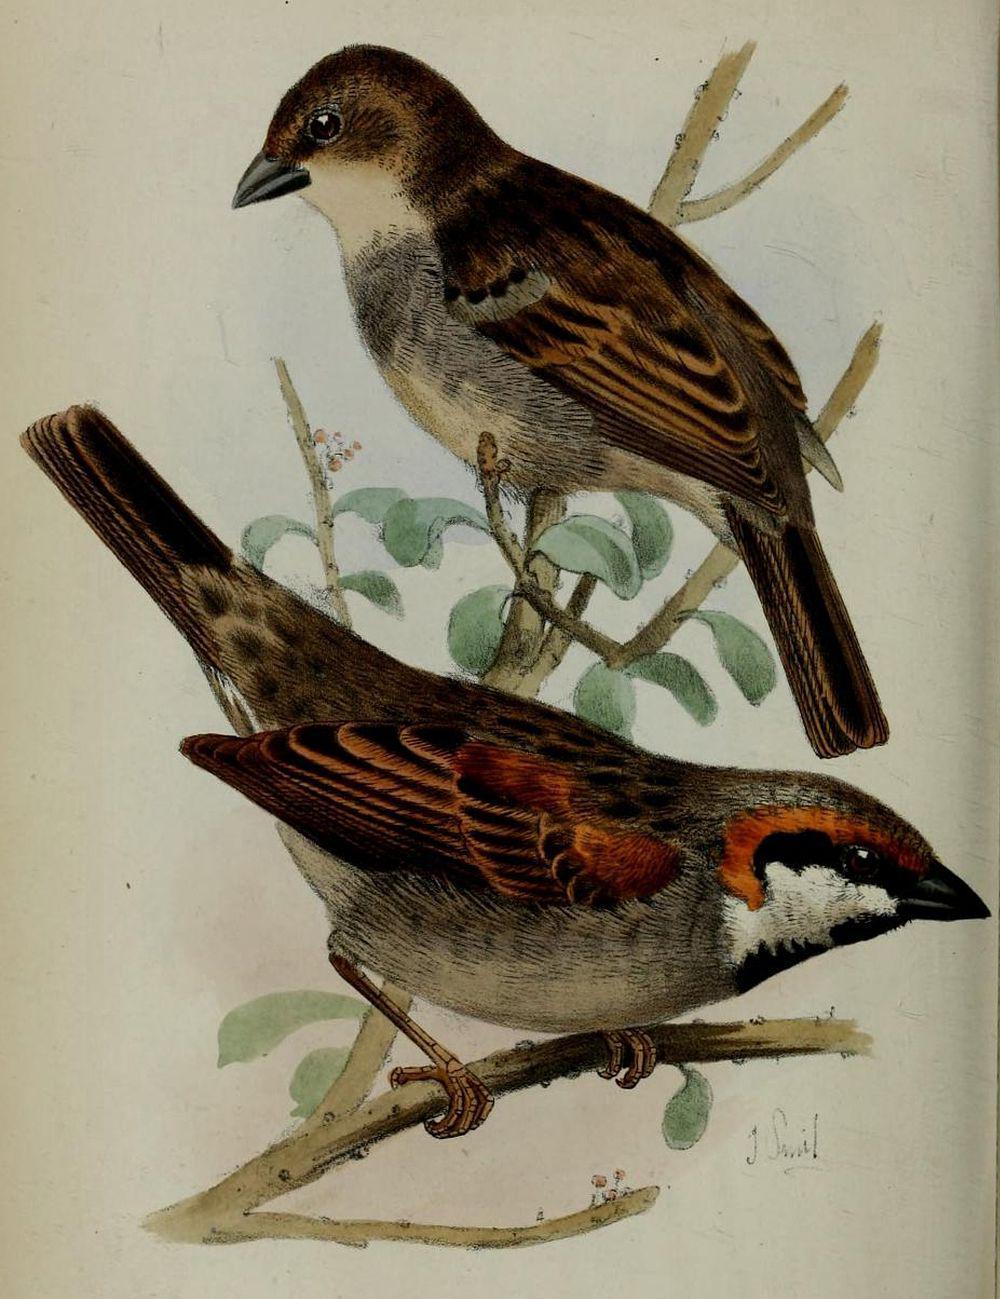 索岛麻雀 / Socotra Sparrow / Passer insularis